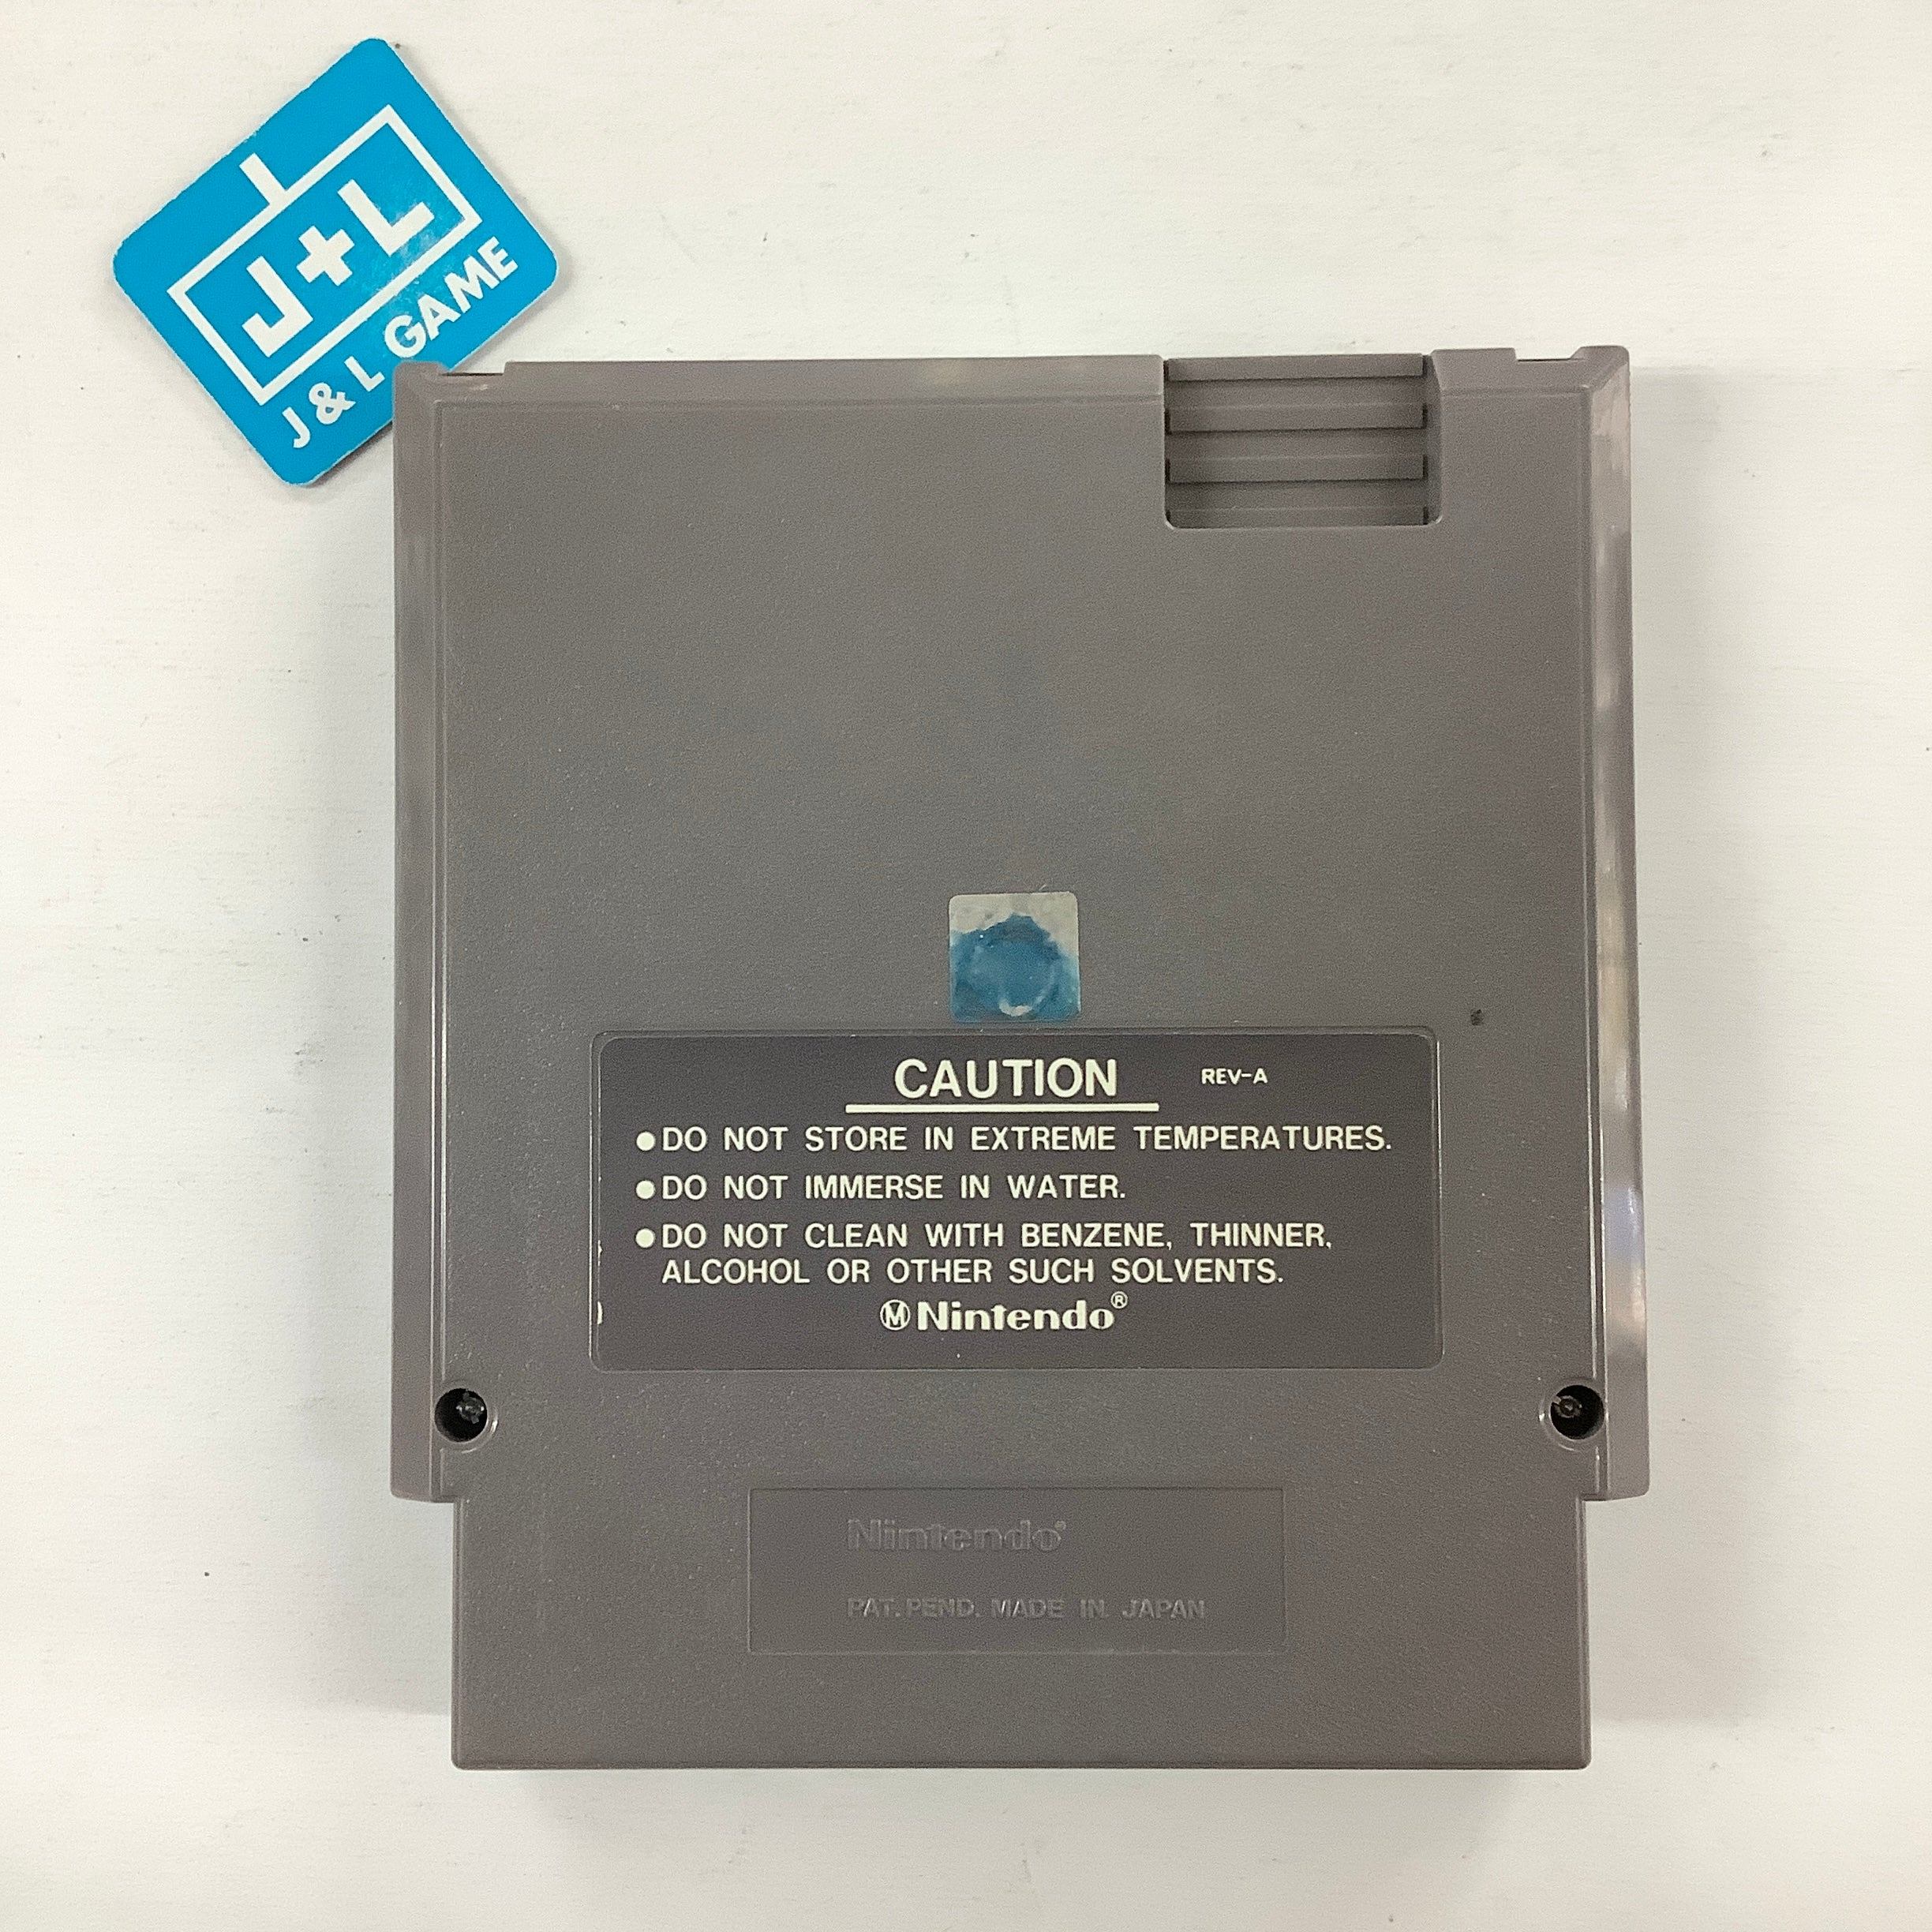 Metroid - (NES) Nintendo Entertainment System [Pre-Owned] Video Games Nintendo   